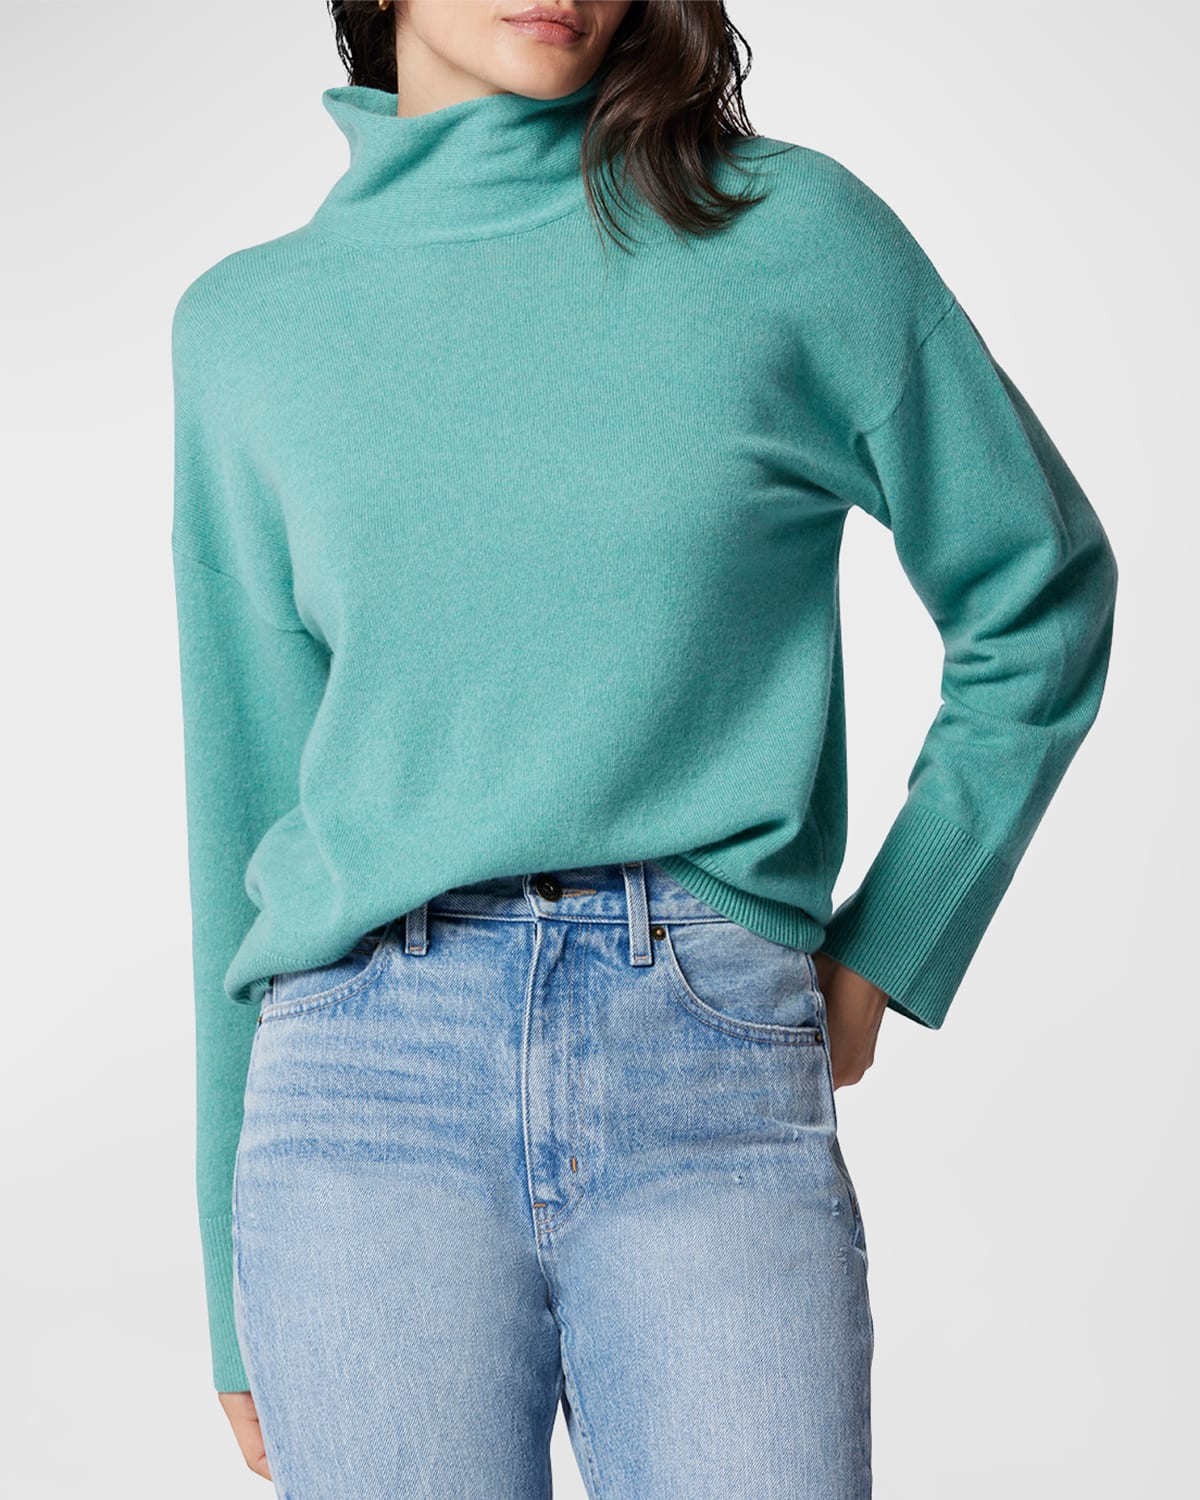 Maeve Cashmere Turtleneck Pullover Sweater